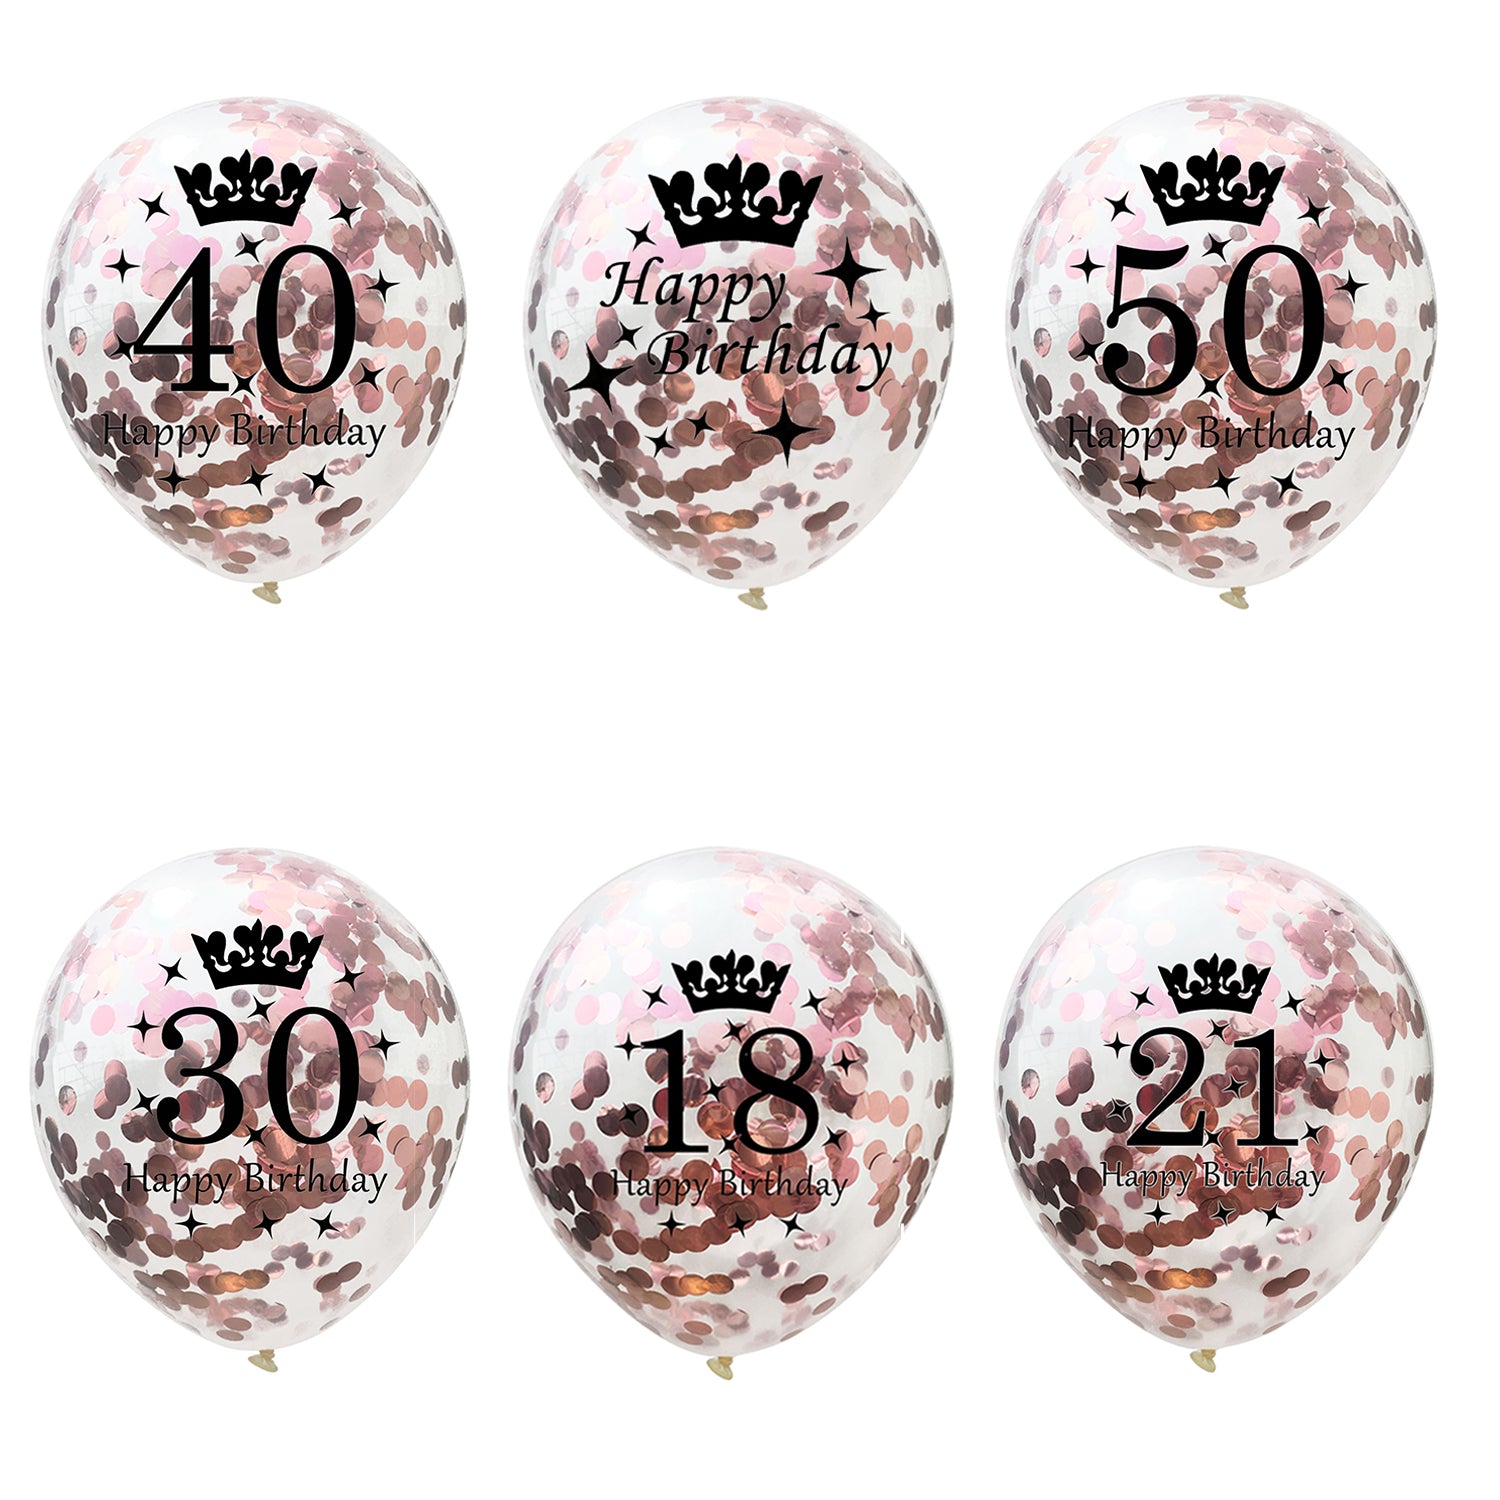 Balon 12 Inci, Latex, model Coroana Transparenta, pentru Onomastica, Balon Onomastica 30 40 50 Ani